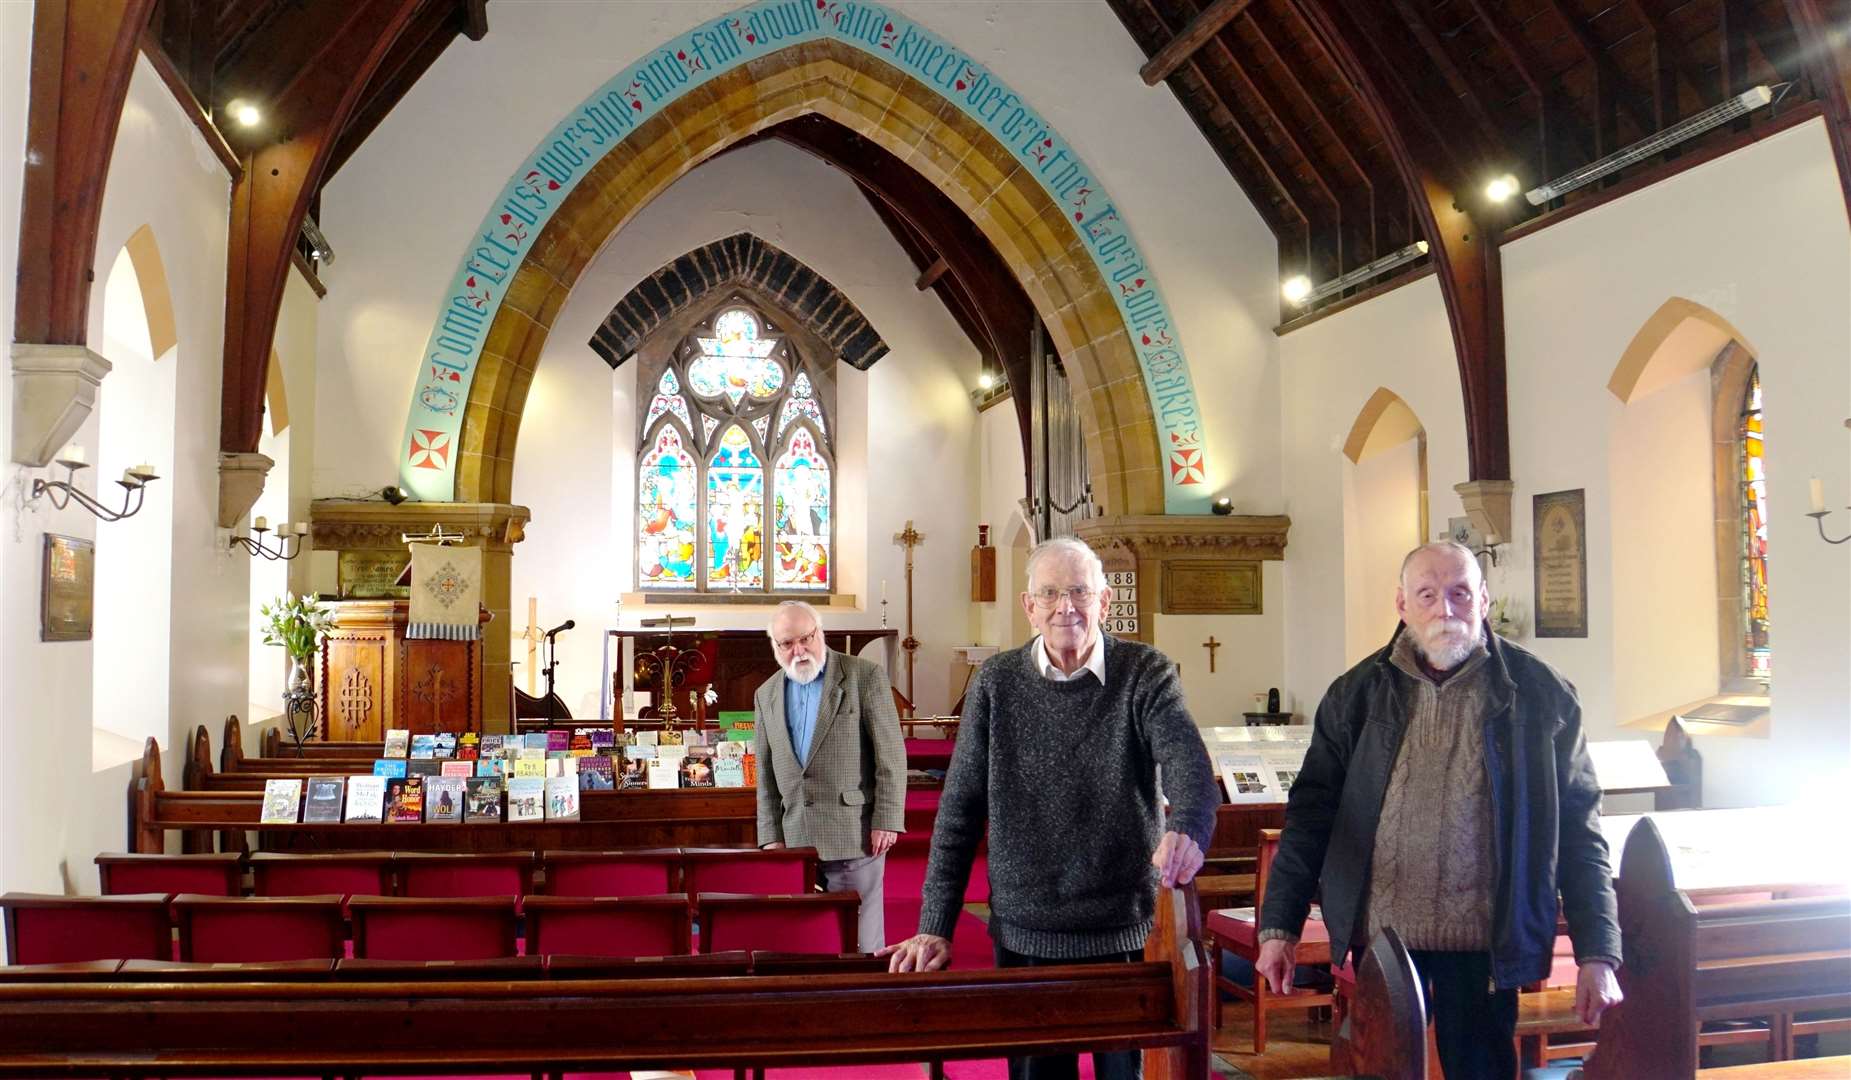 St John's Church interior with, from left, Gordon Johnson, Richard Stanley and Brian Thorogood.